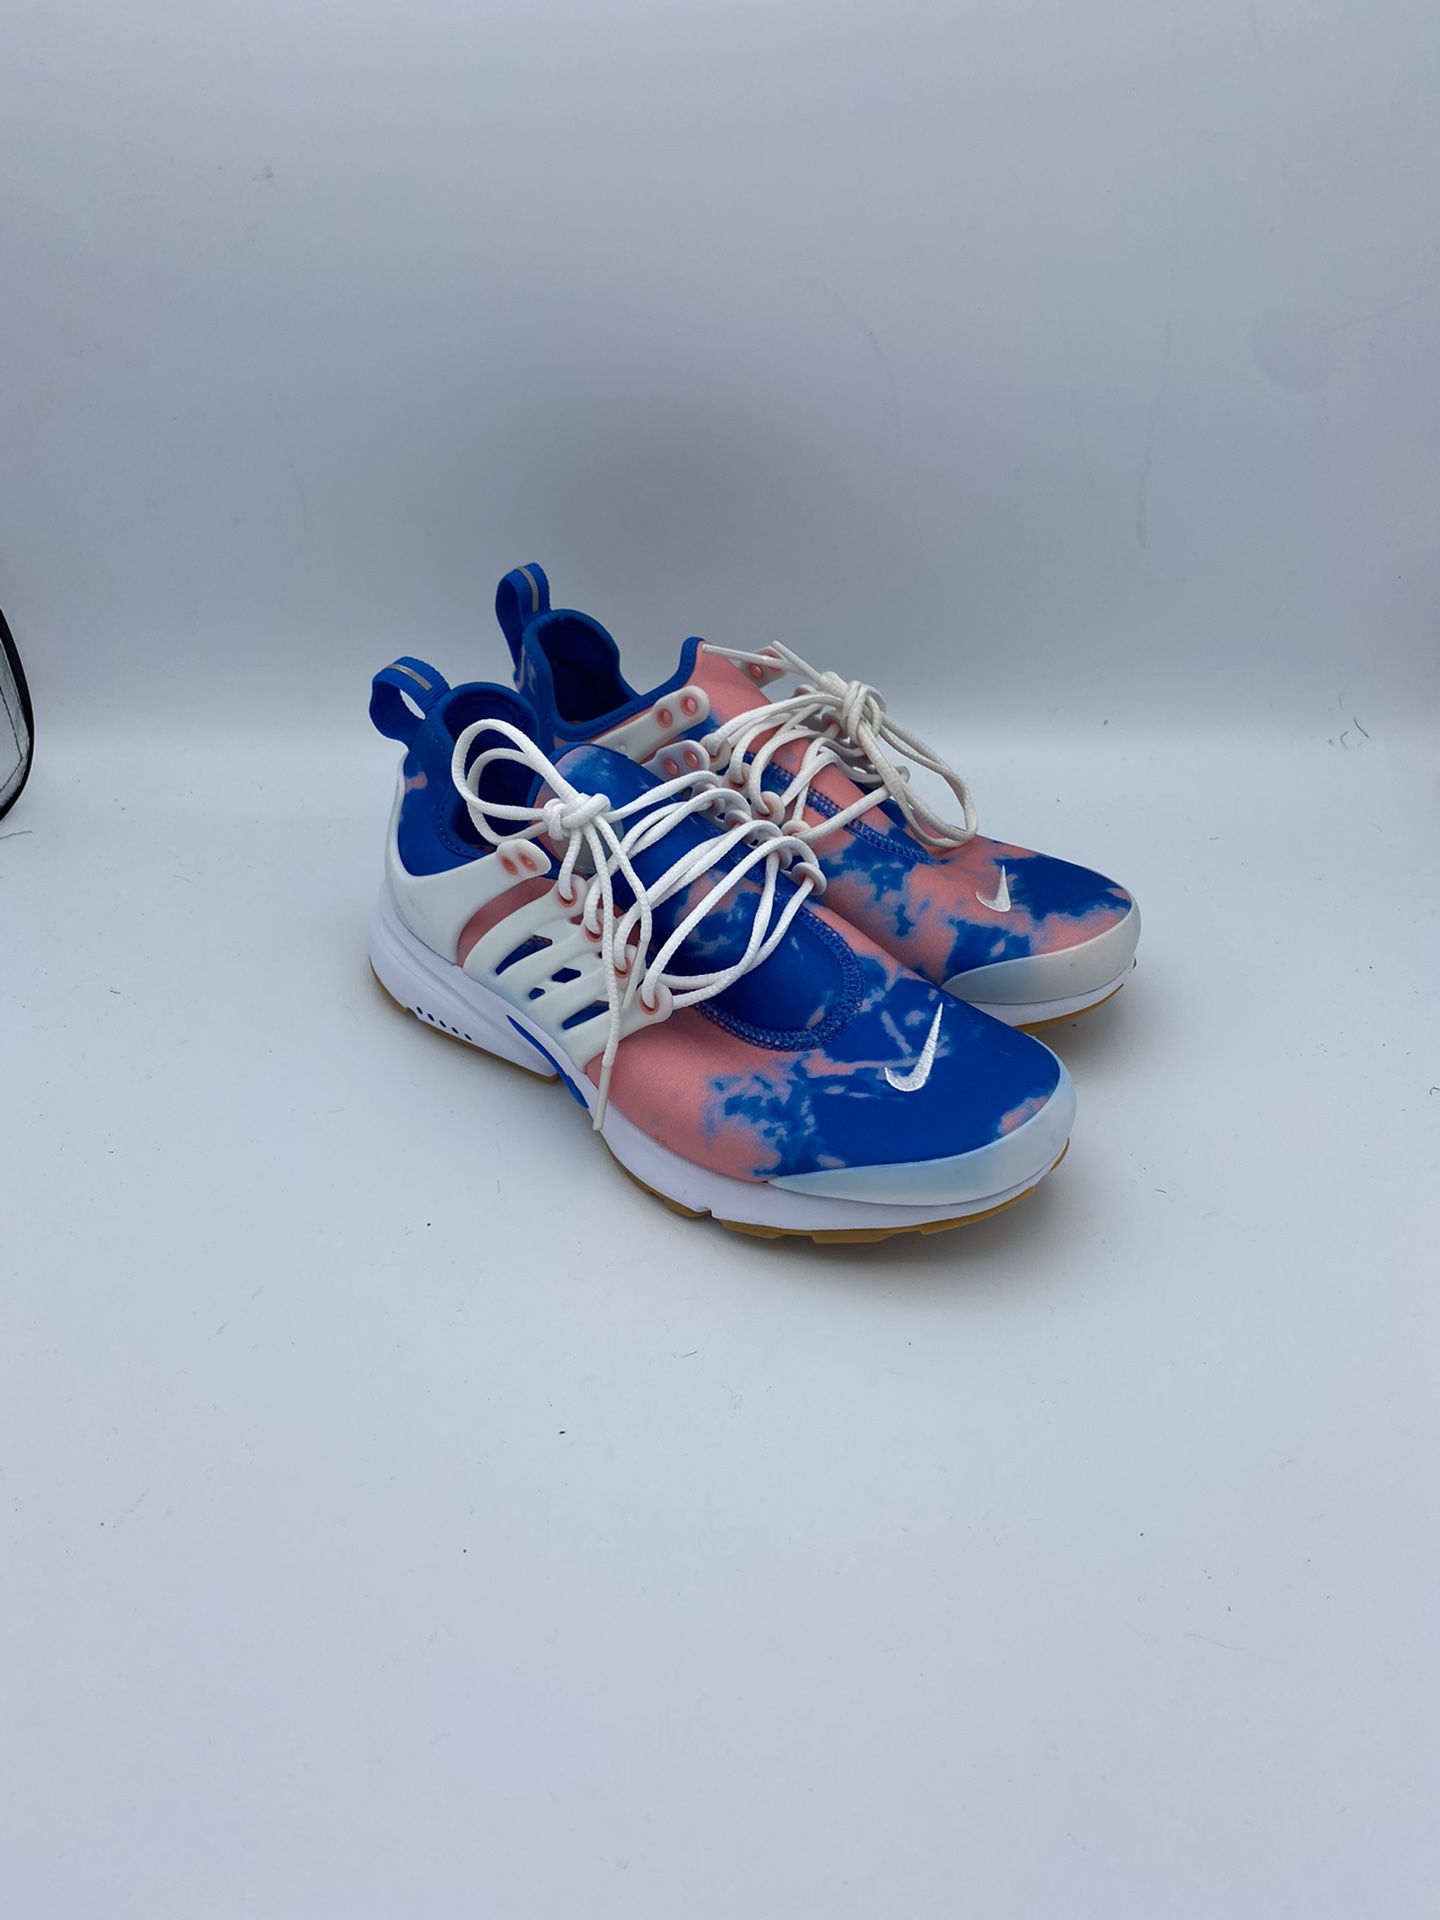 Nike Air Presto TD Shoe Women’s Size 7